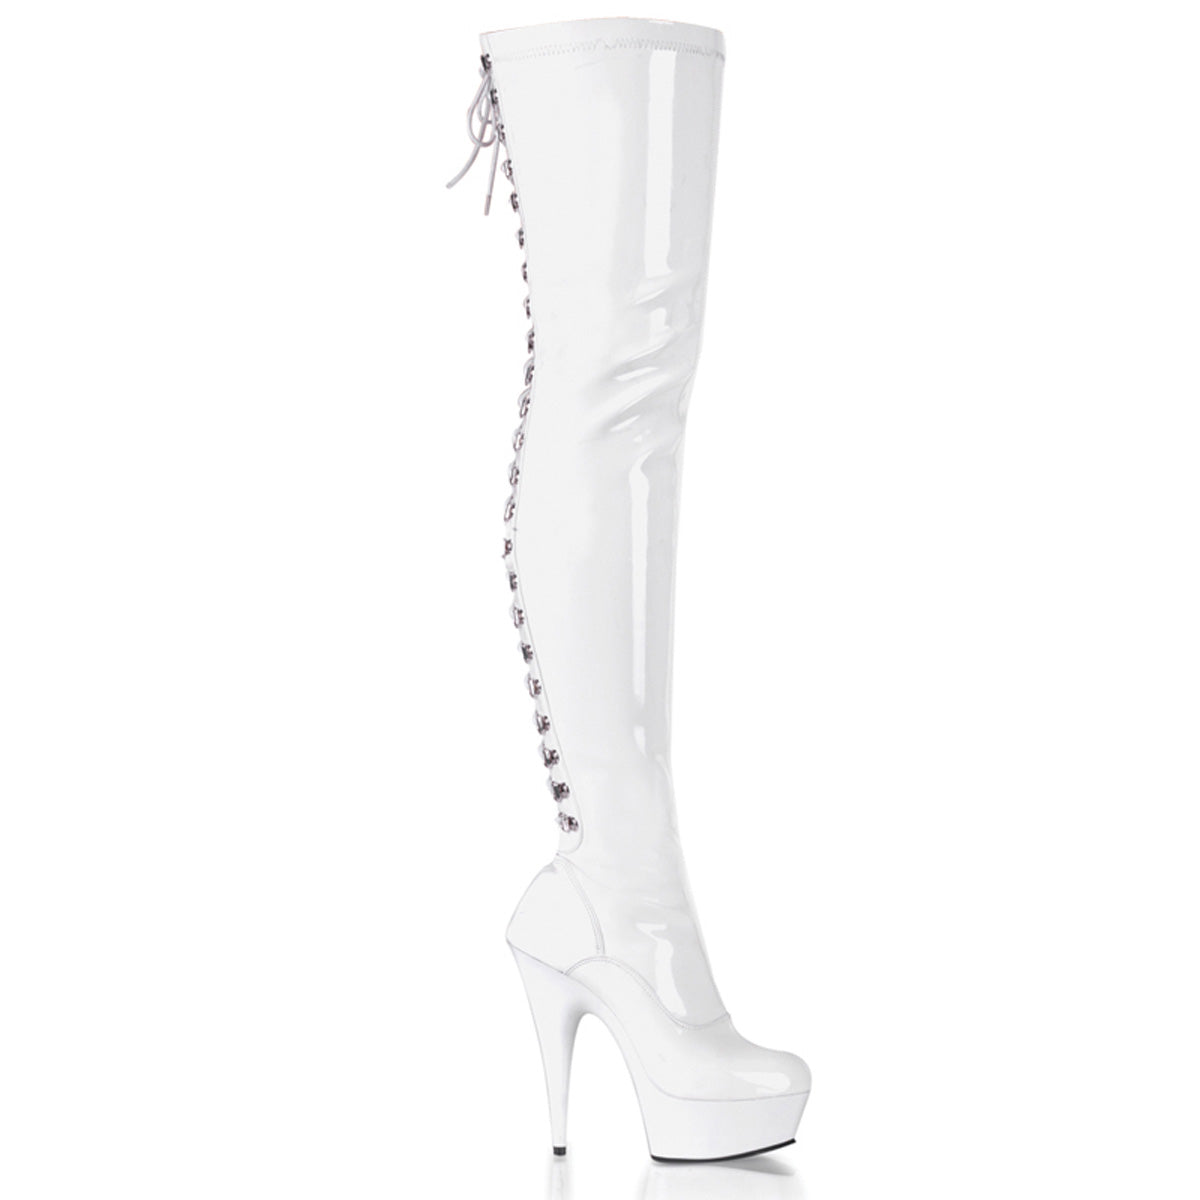 DELIGHT-3063 6 Inch Heel White Patent  Stripper Platforms High Heels